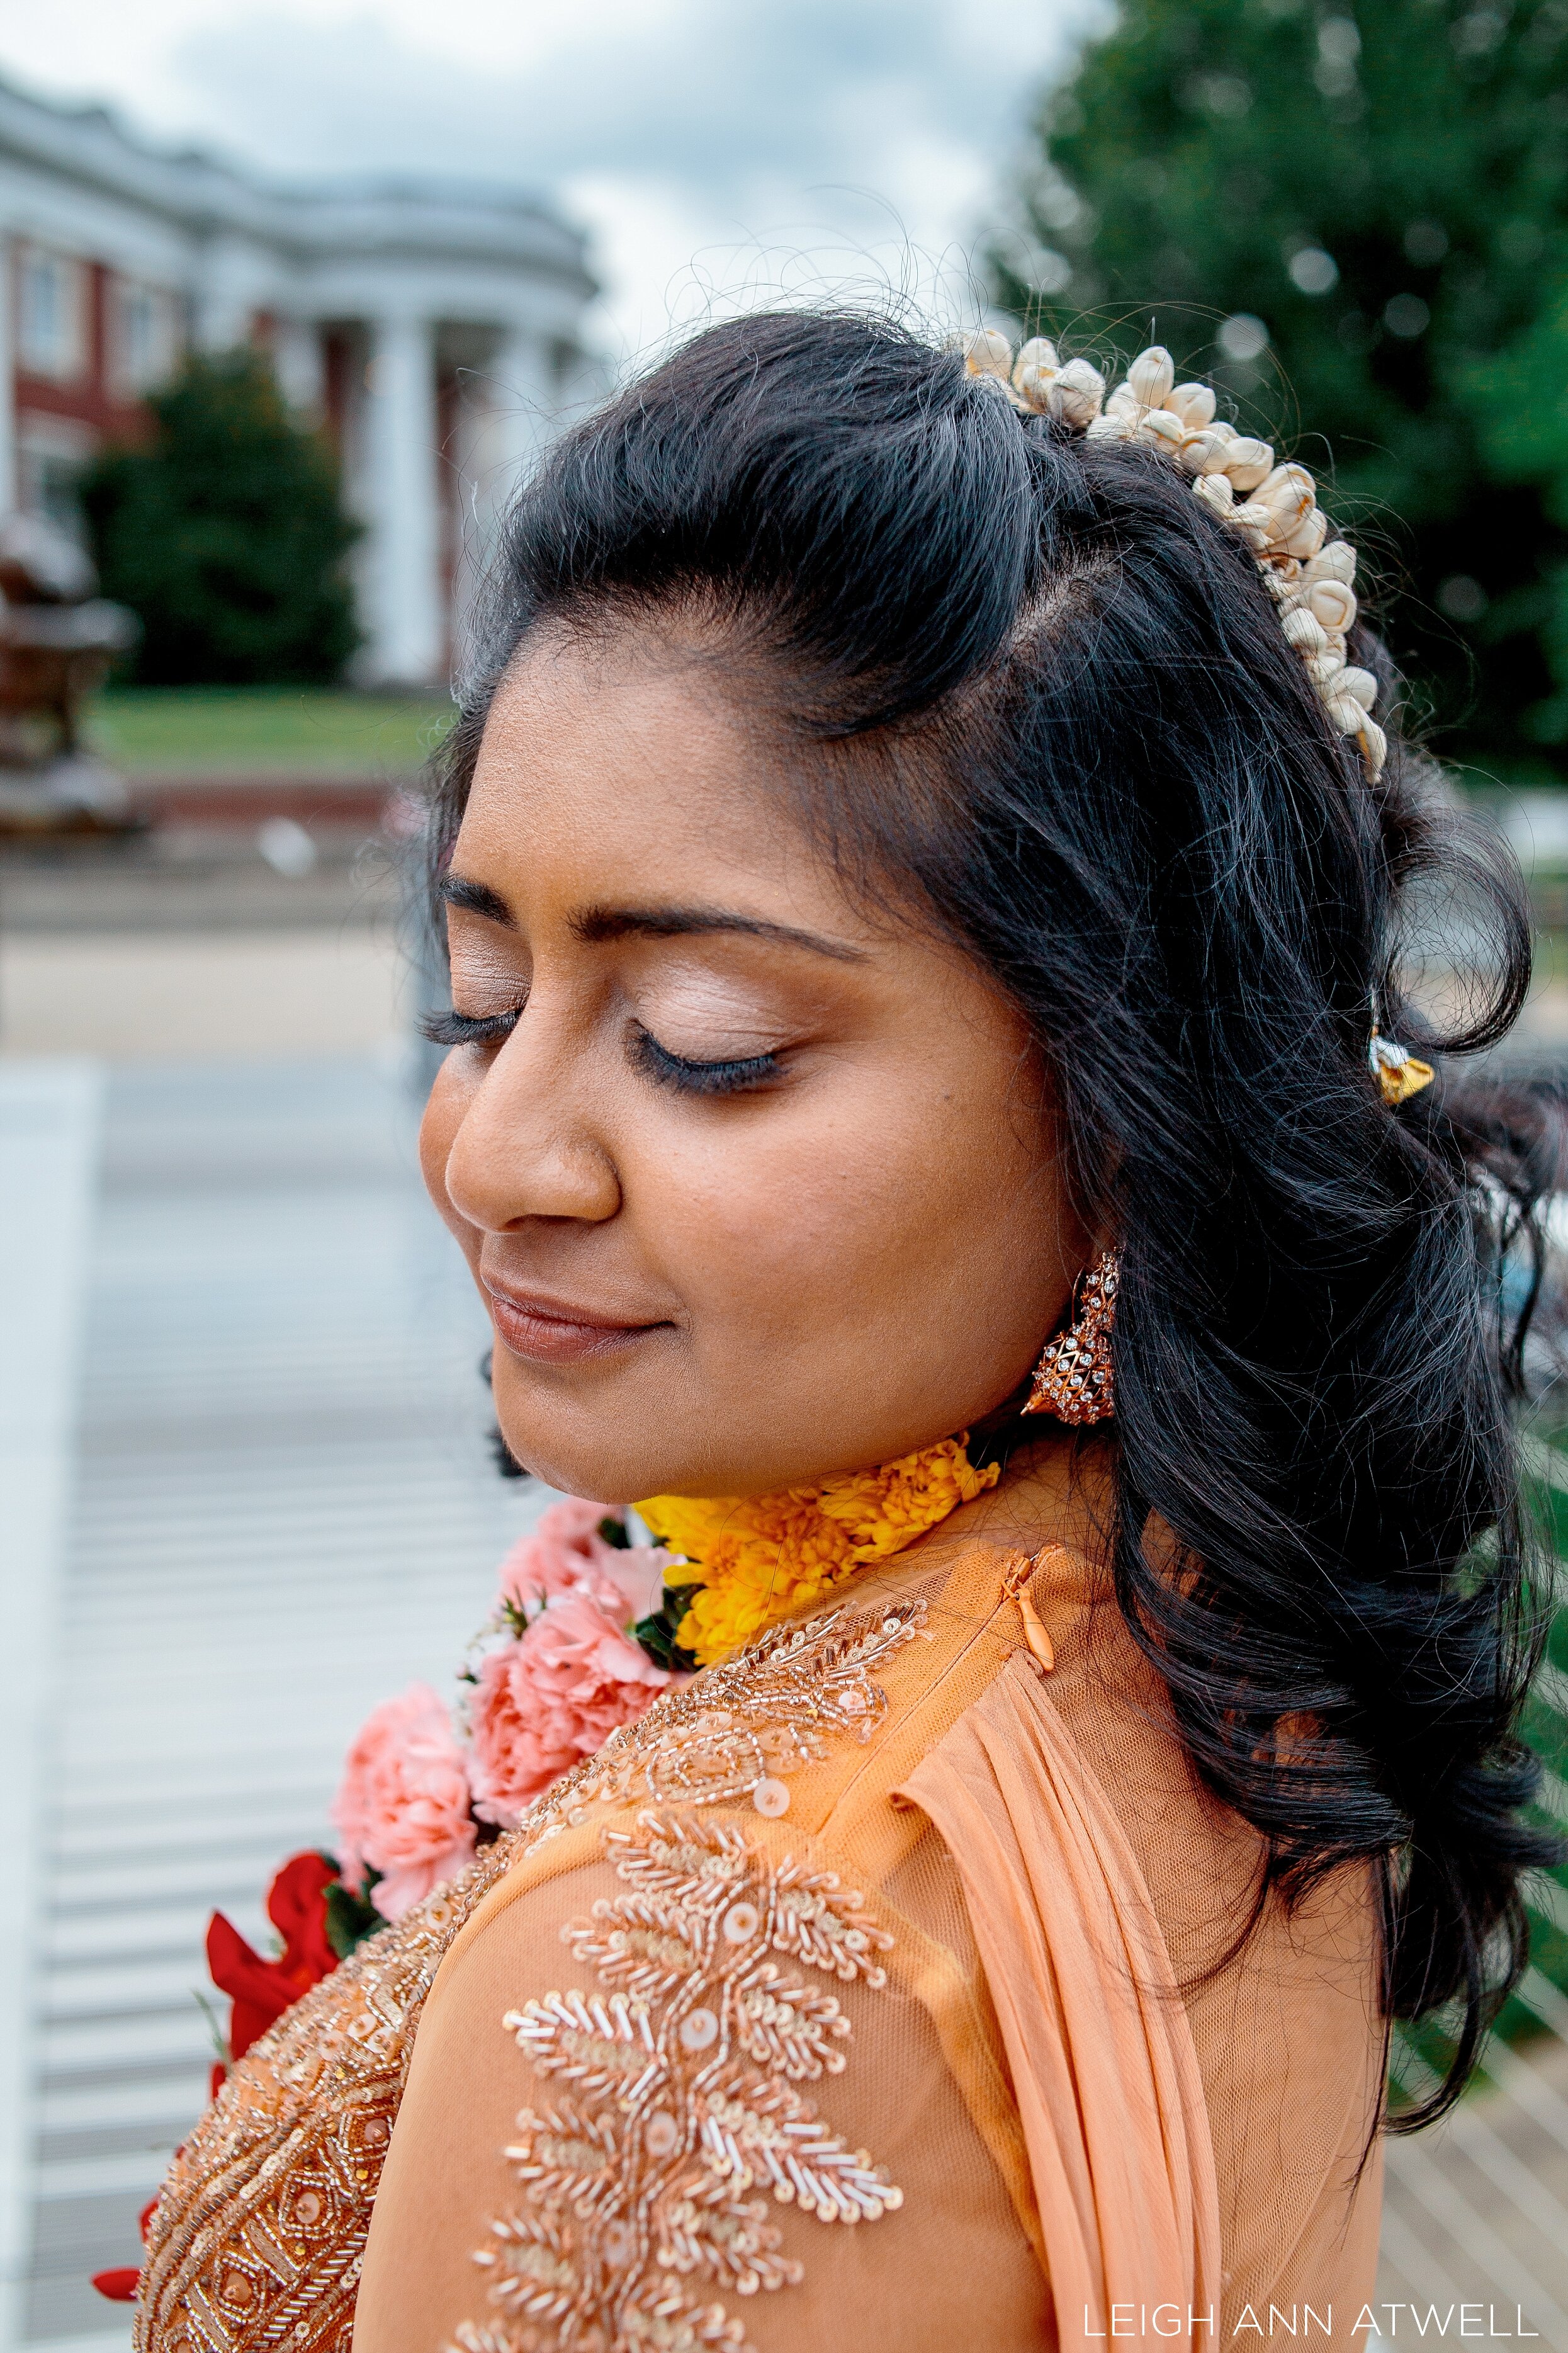 Indian wedding hairstyles, Indian bridal hairstyles, Indian bride hairstyle